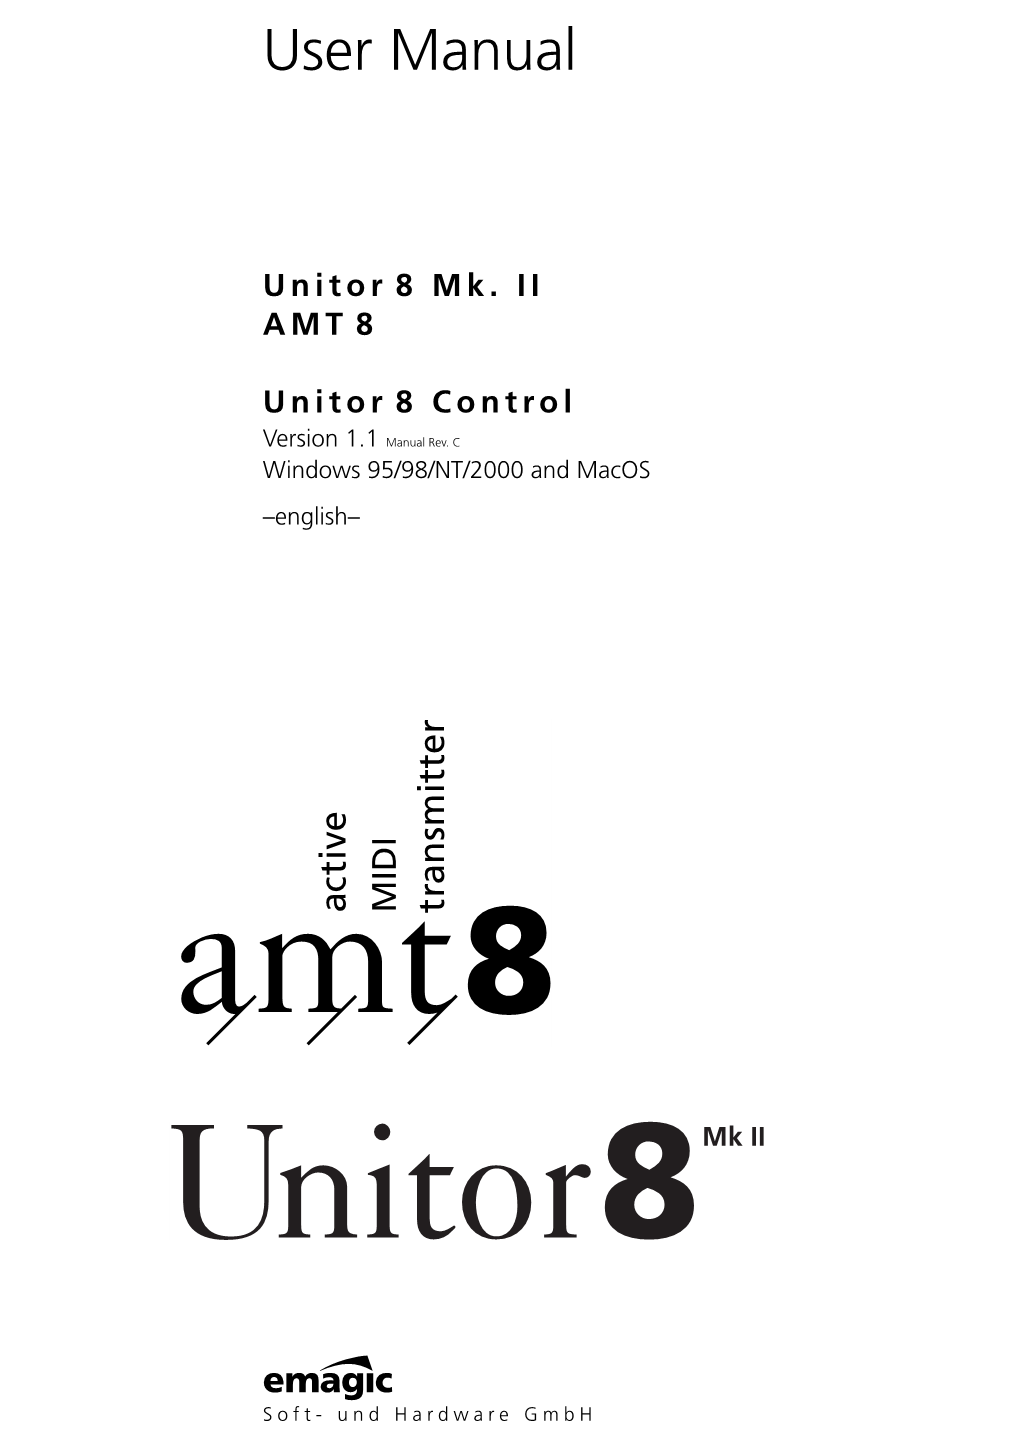 User Manual Unitor 8